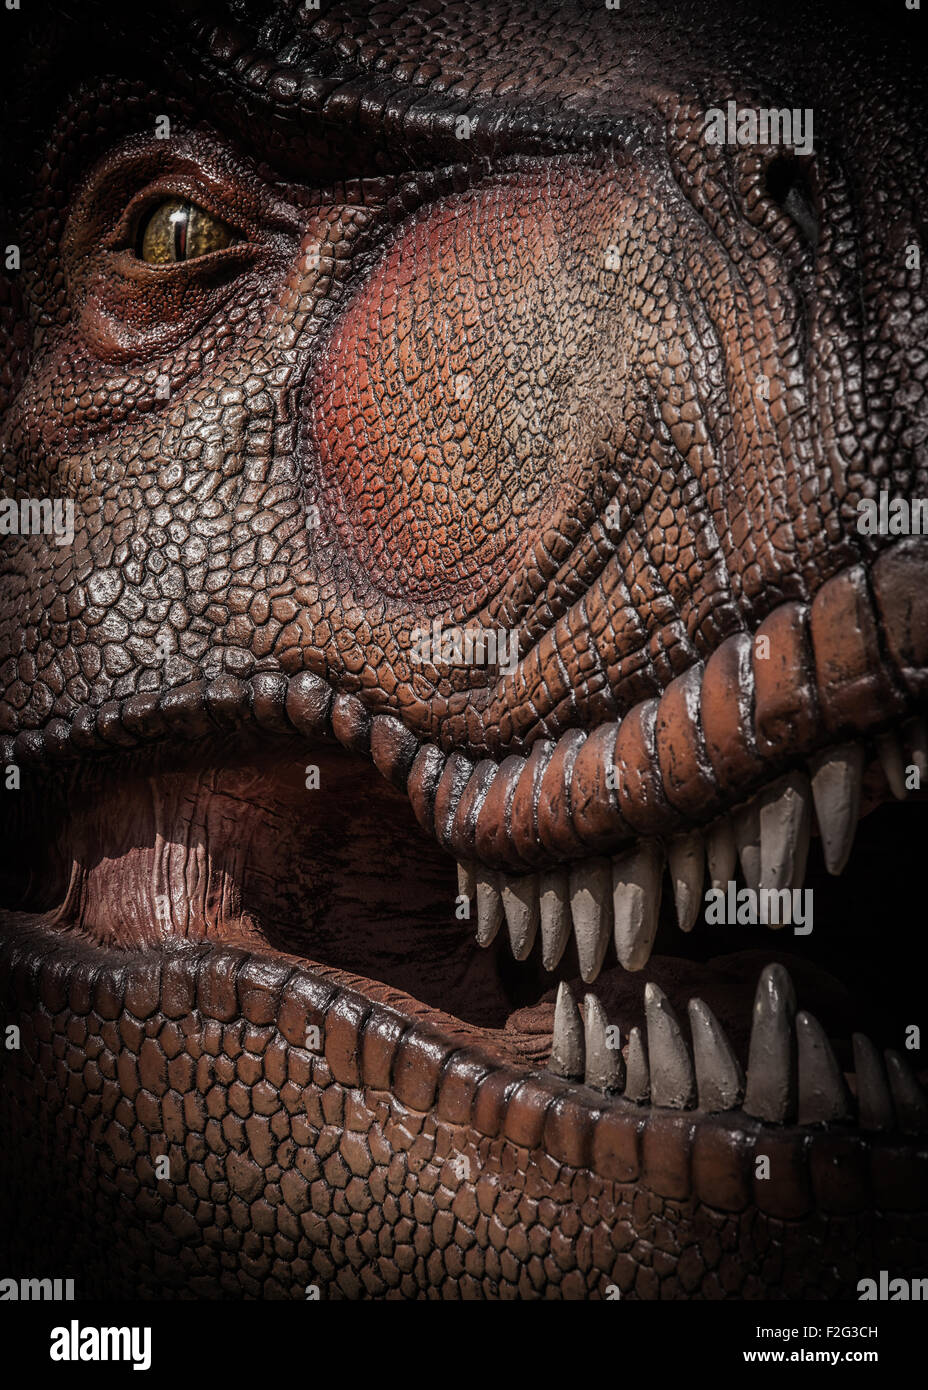 Carnivorous tyrannosaurus rex dinosaur -Fotos und -Bildmaterial in